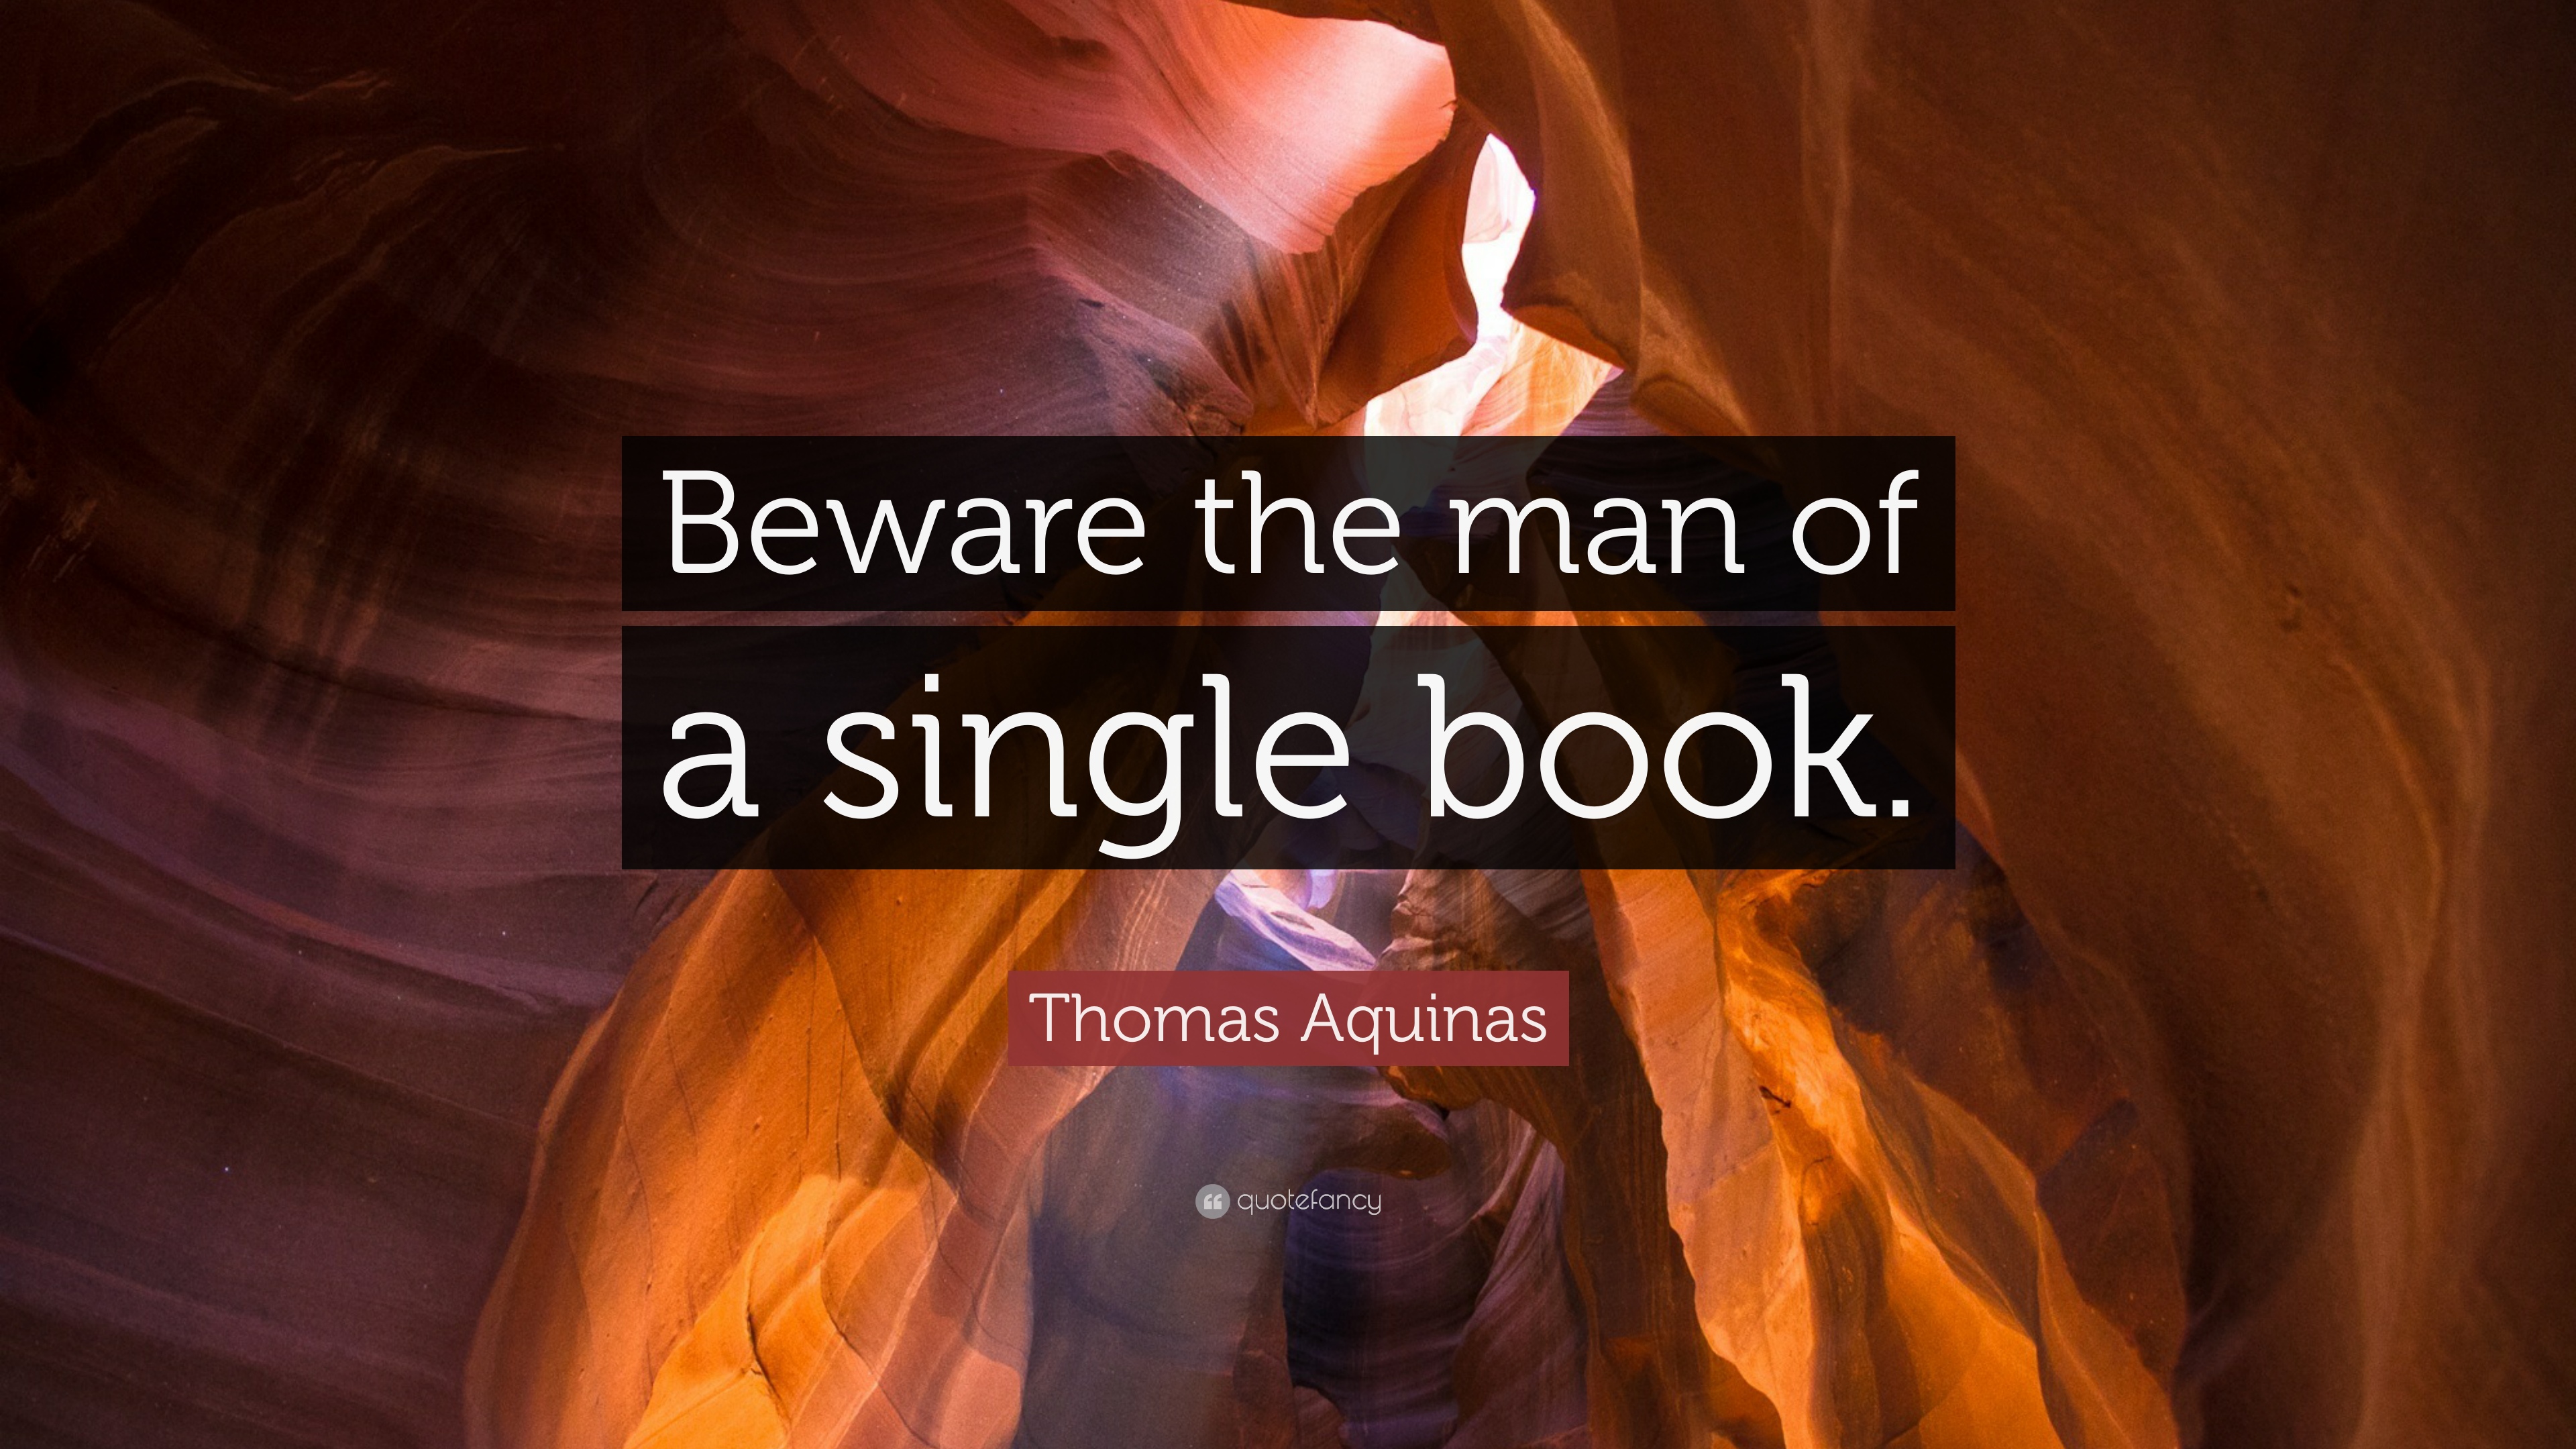 Thomas Aquinas Quote: “Beware the man of a single book.” 12